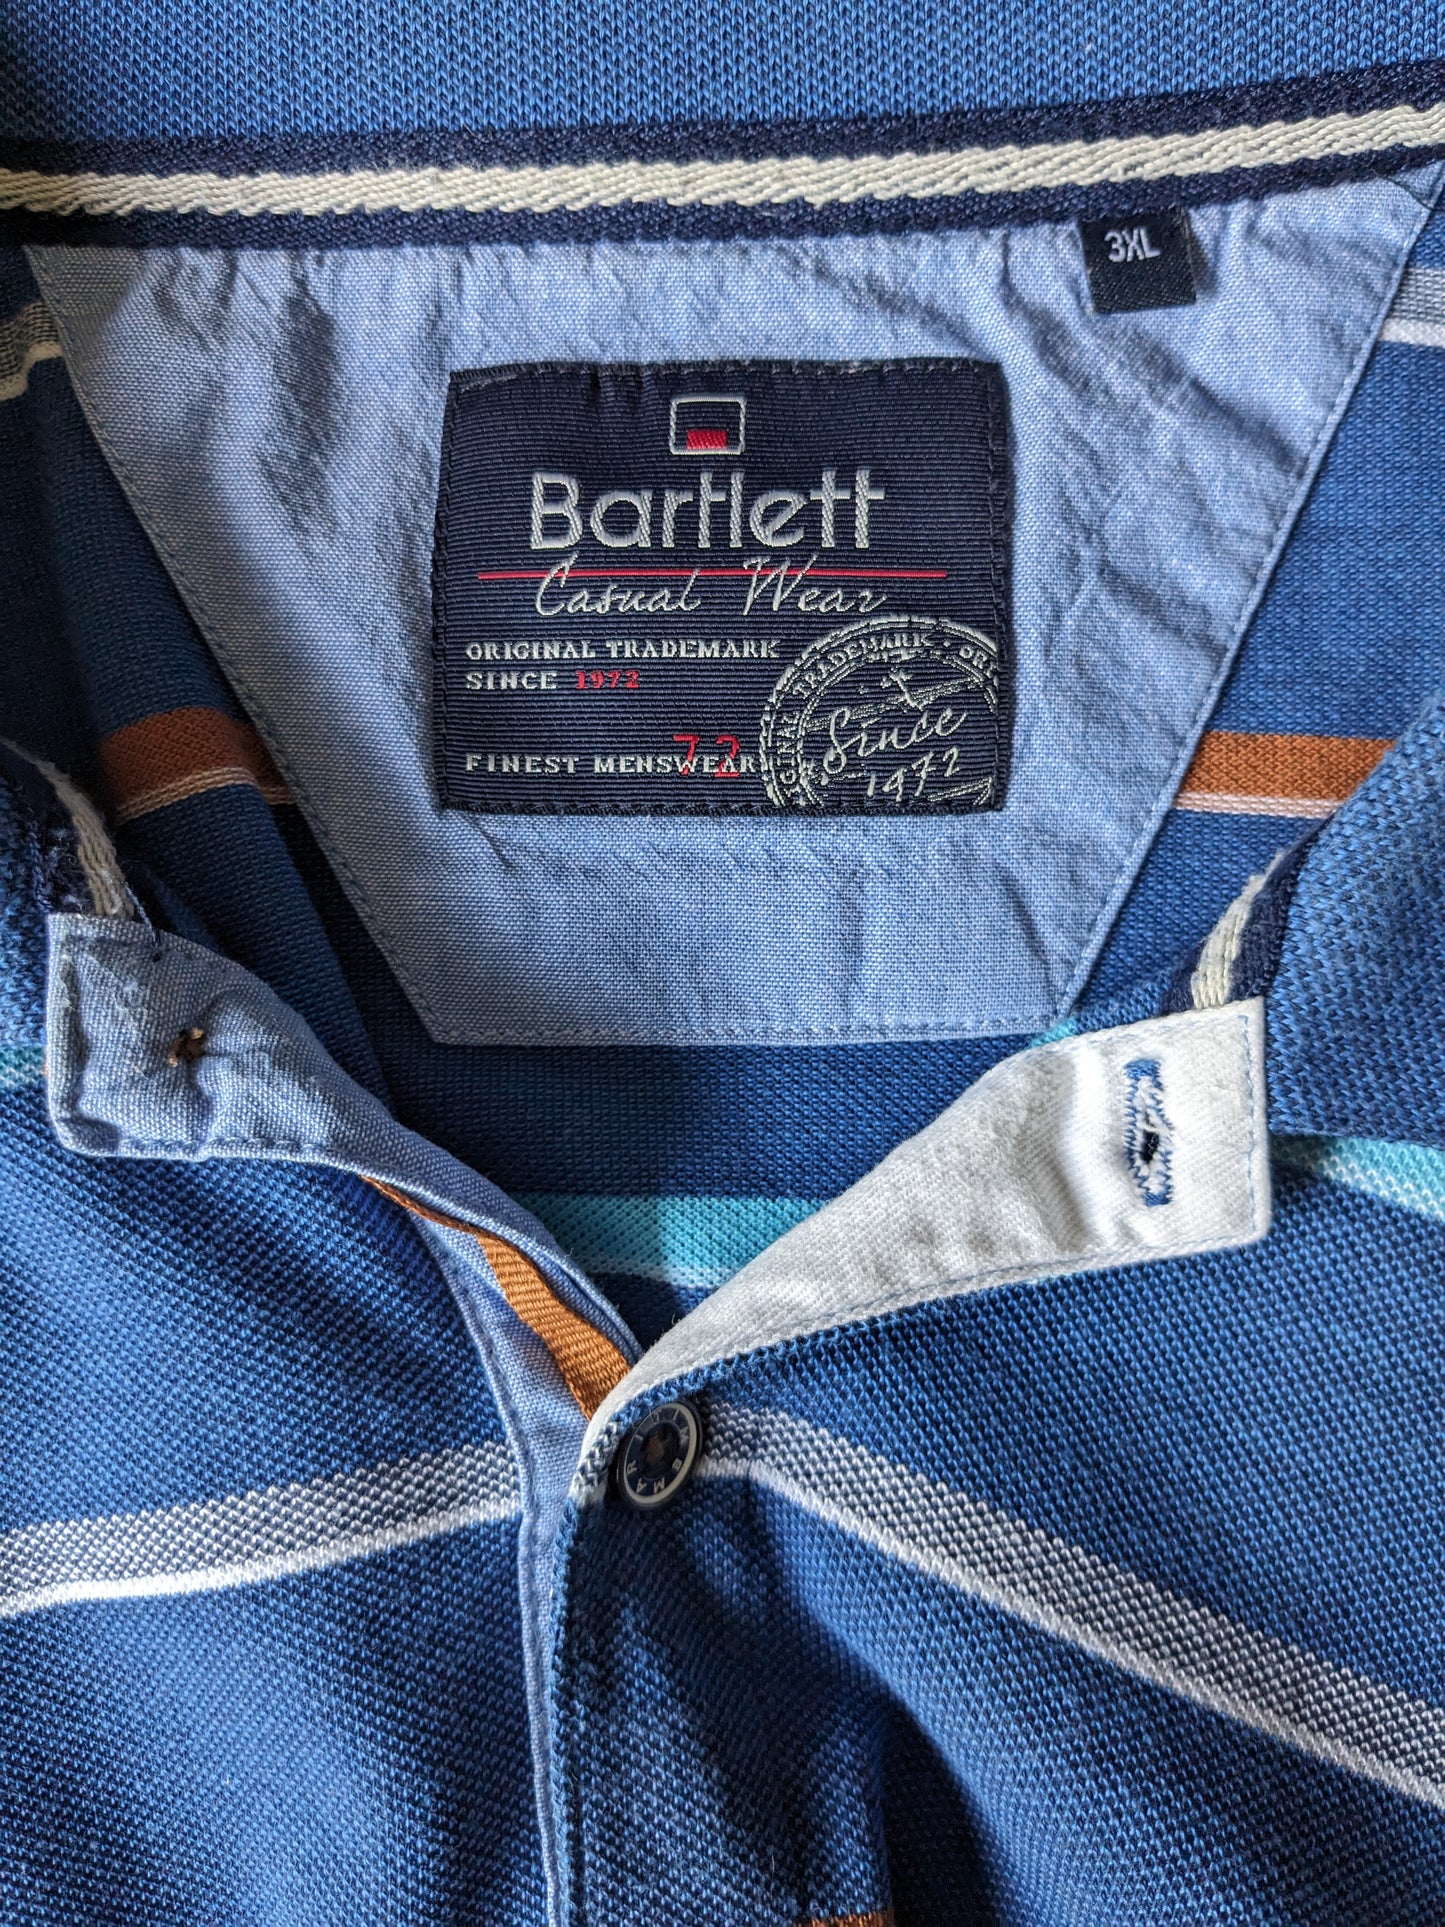 Bartlett Polo. Blue brown striped. Size 3XL / XXXL.